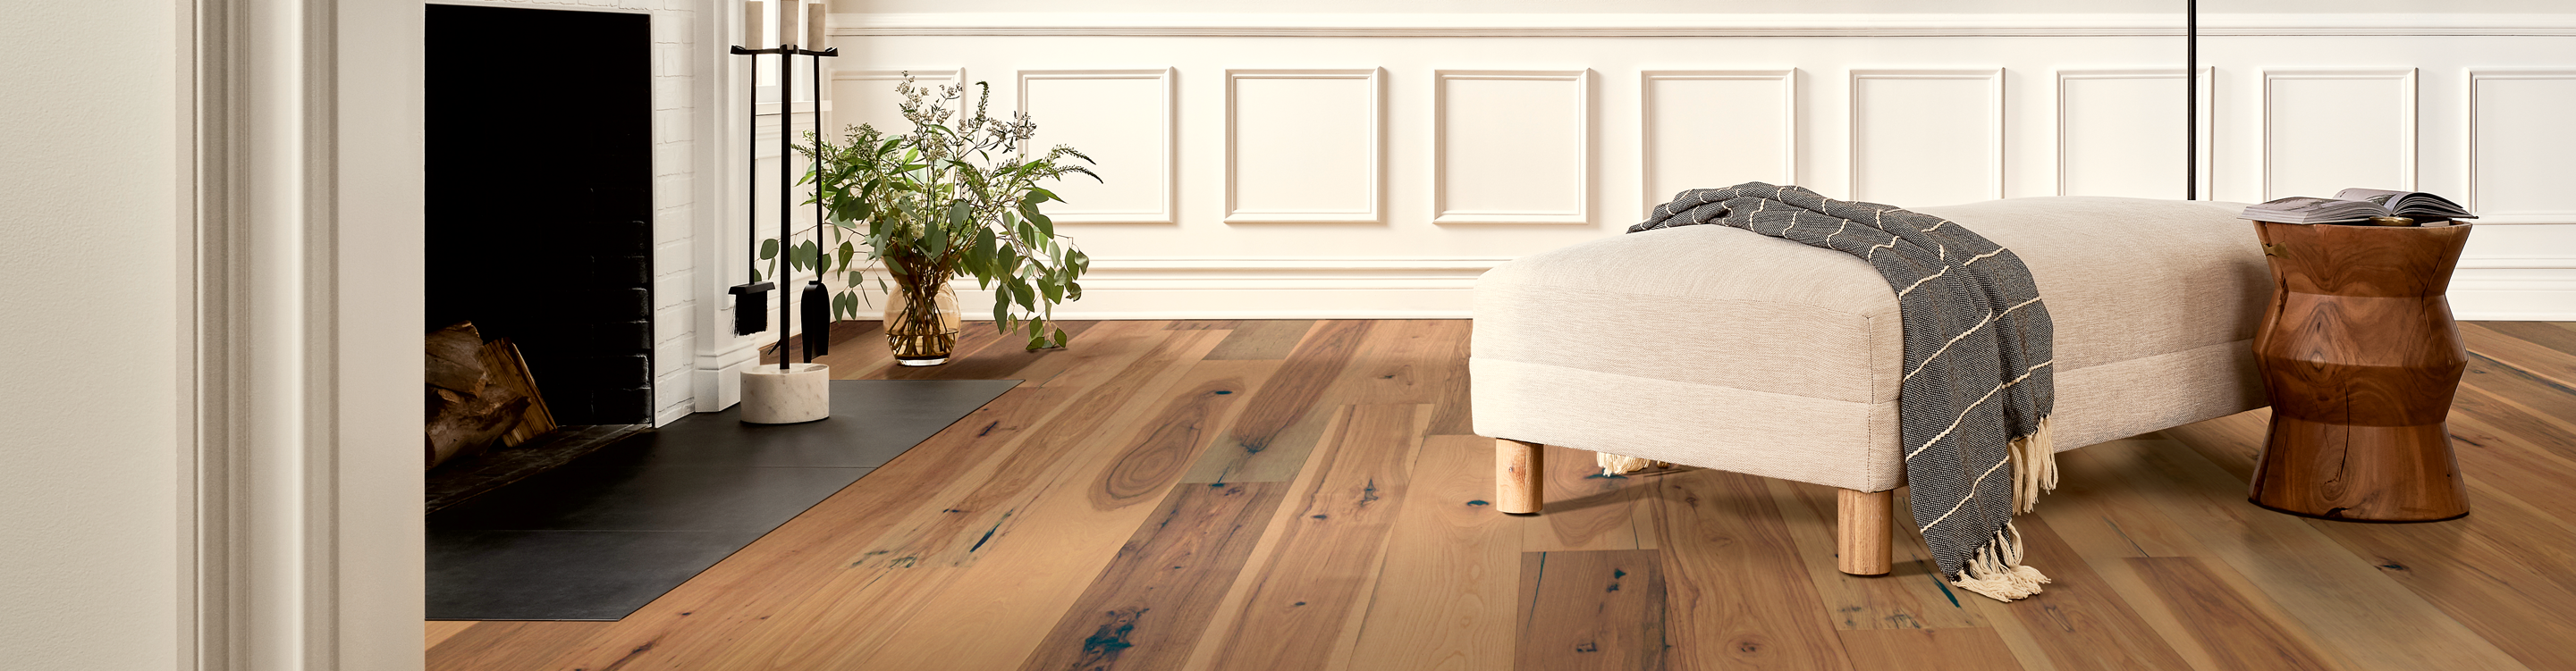 medium toned hardwood flooring in living room